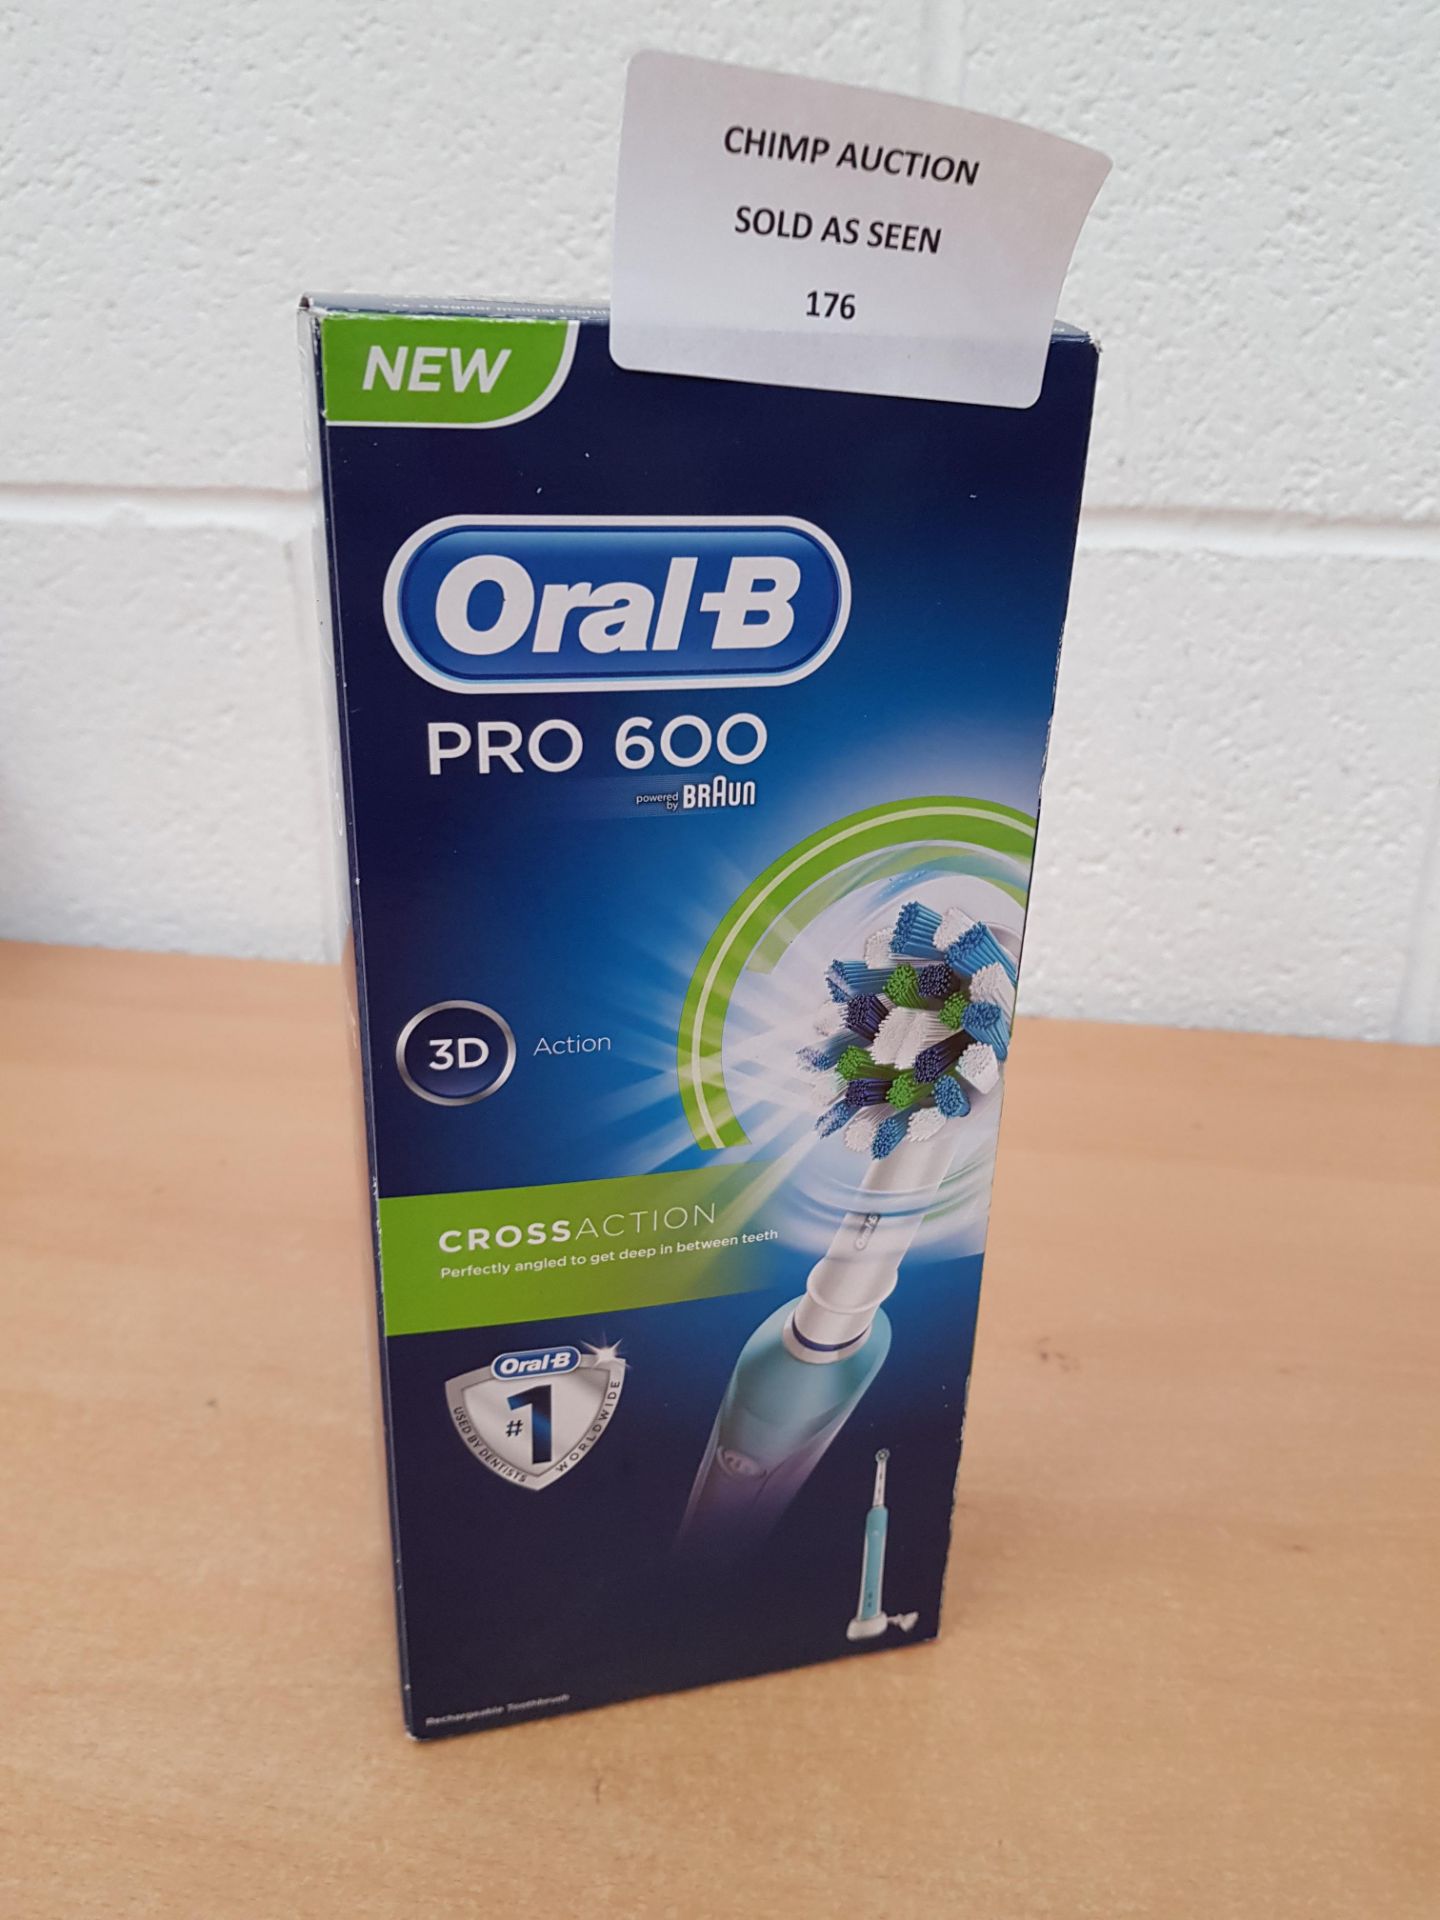 Oral-B Pro 600 Braun electric 3D action toothbrush